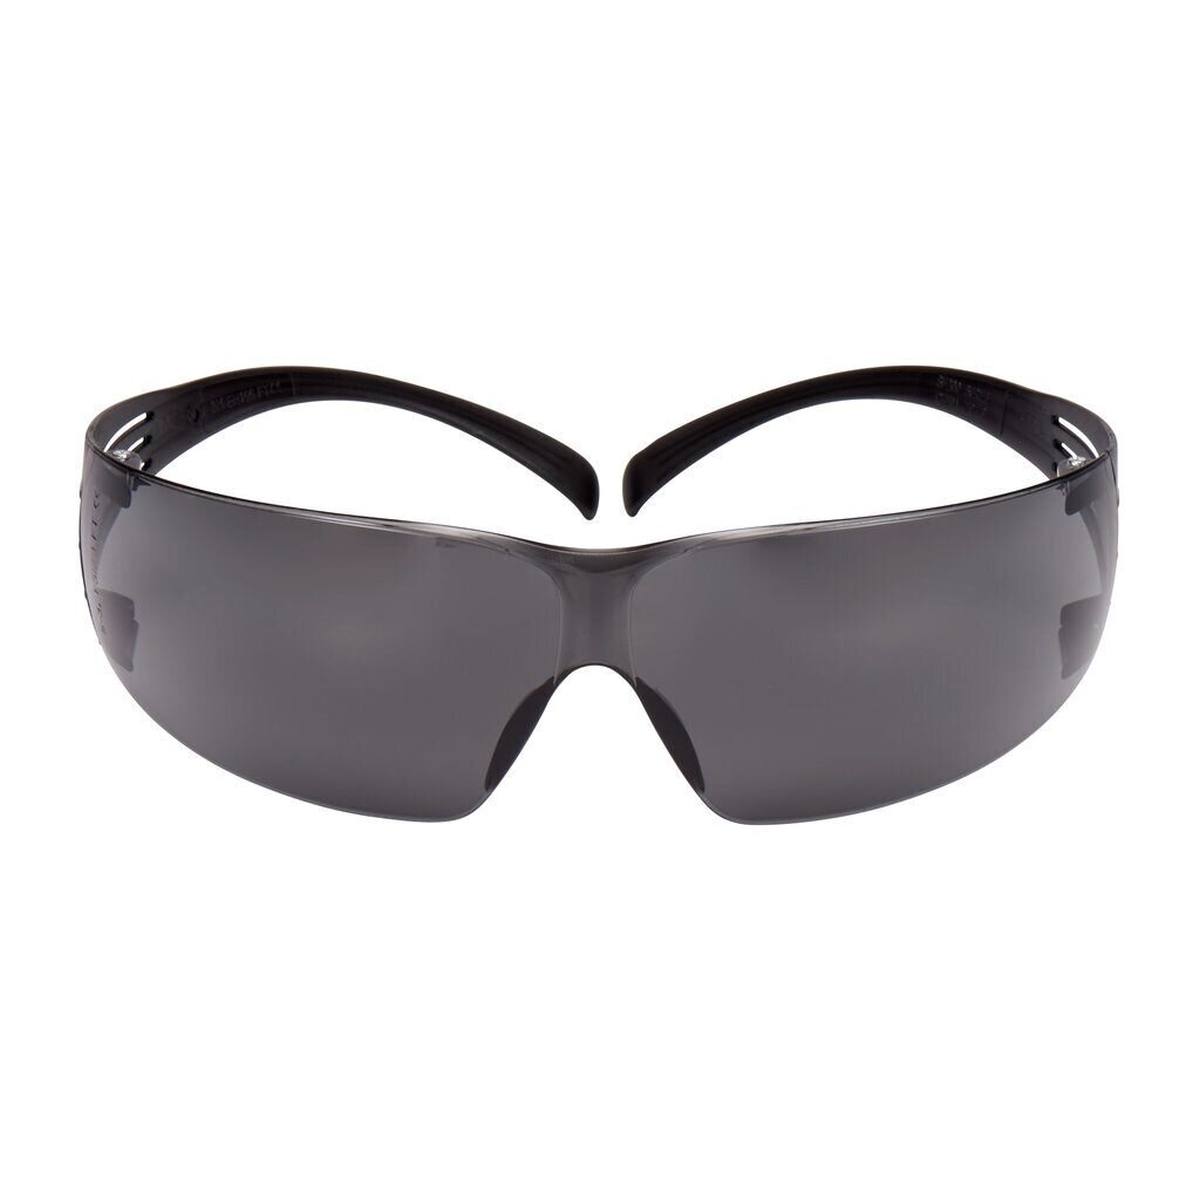 3M SecureFit 200 safety spectacles, anti-scratch/anti-fog coating, grey lens, SF202AS/AF-EU